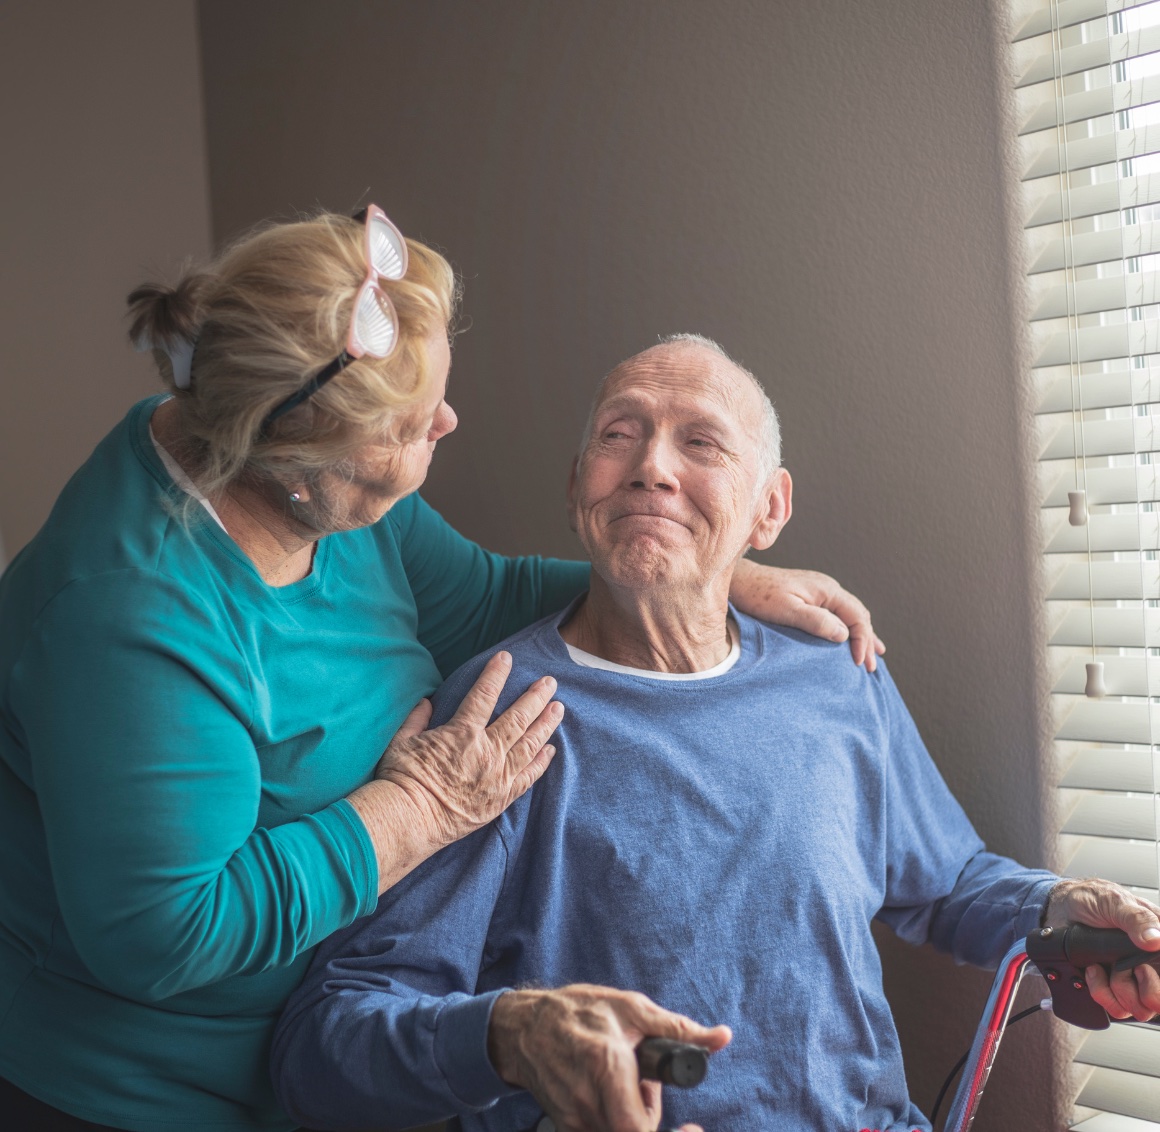 A caregiver an older adult smile and enjoy time together, representing quality Respite Care in Mecklenburg